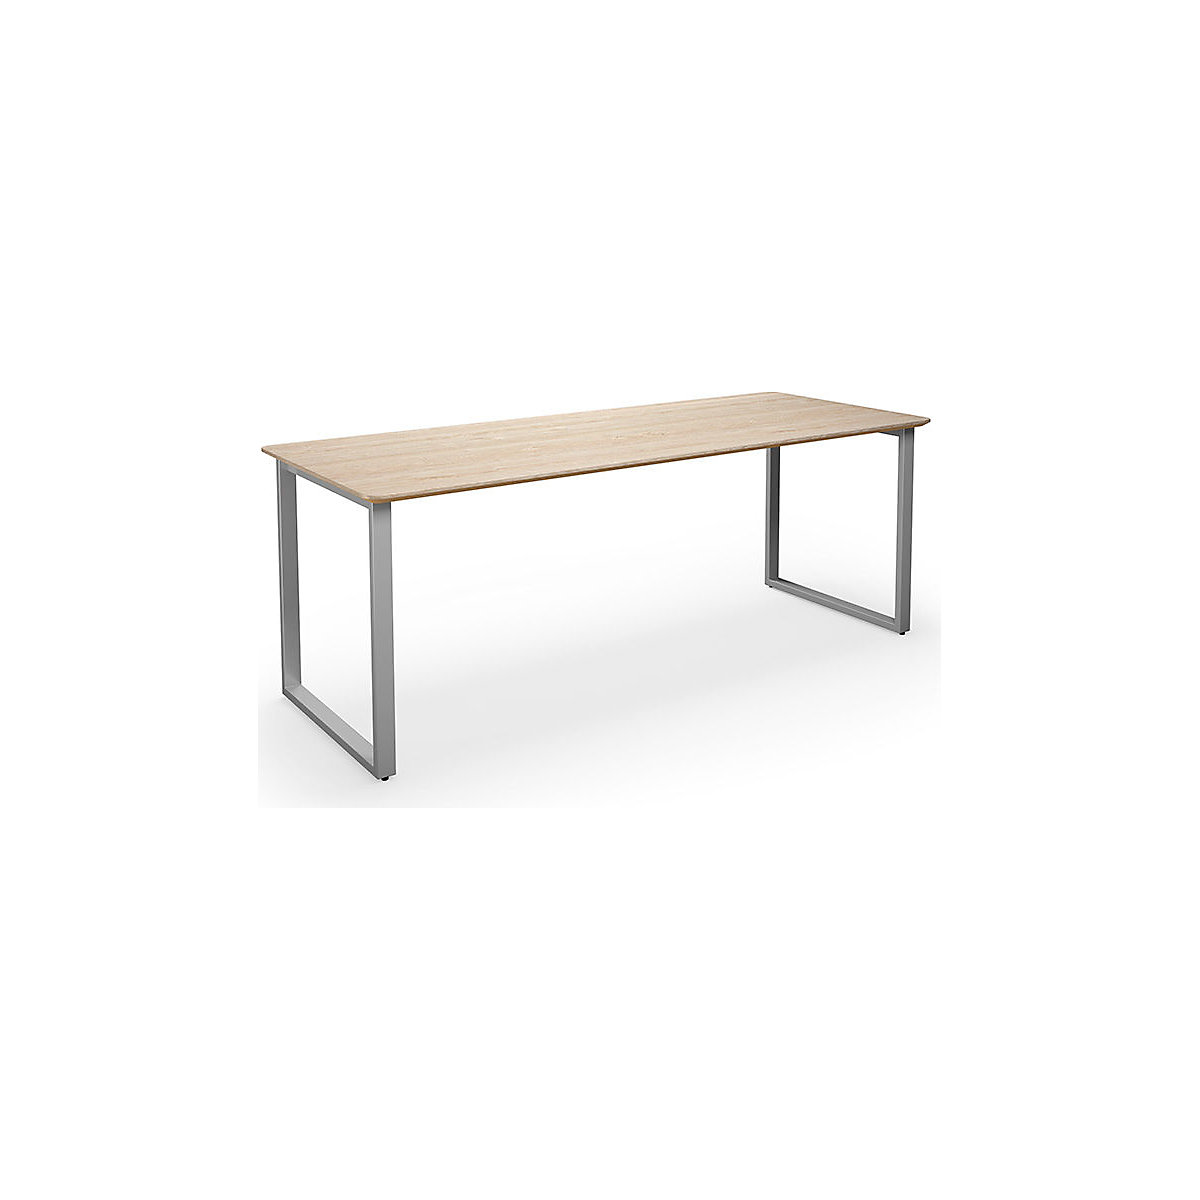 DUO-O Trend multi-purpose desk, straight tabletop, rounded corners, WxD 2000 x 800 mm, oak, silver-5